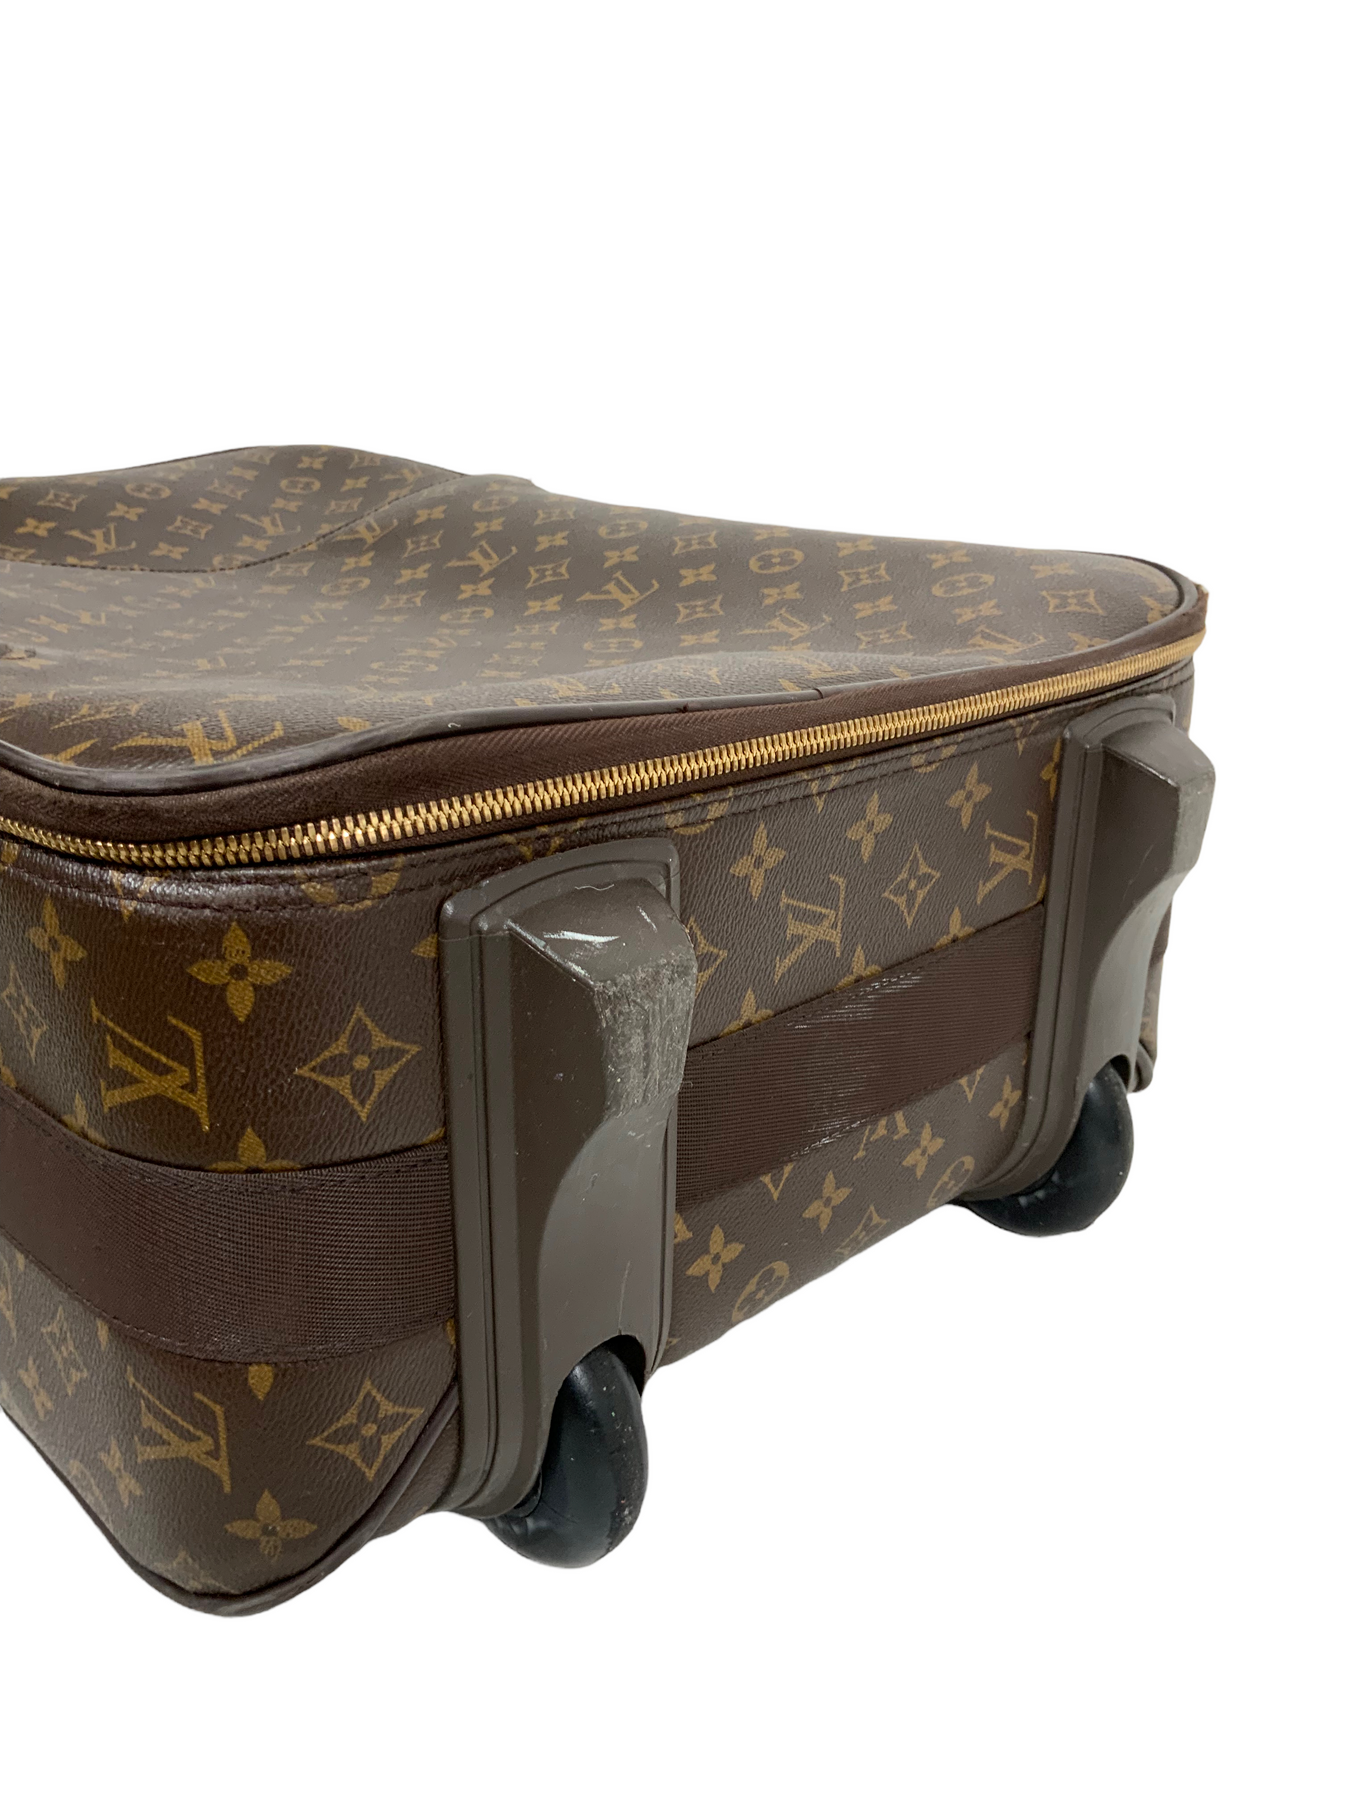 Louis Vuitton Monogram Canvas Leather Pegase 50 cm Luggage at 1stDibs